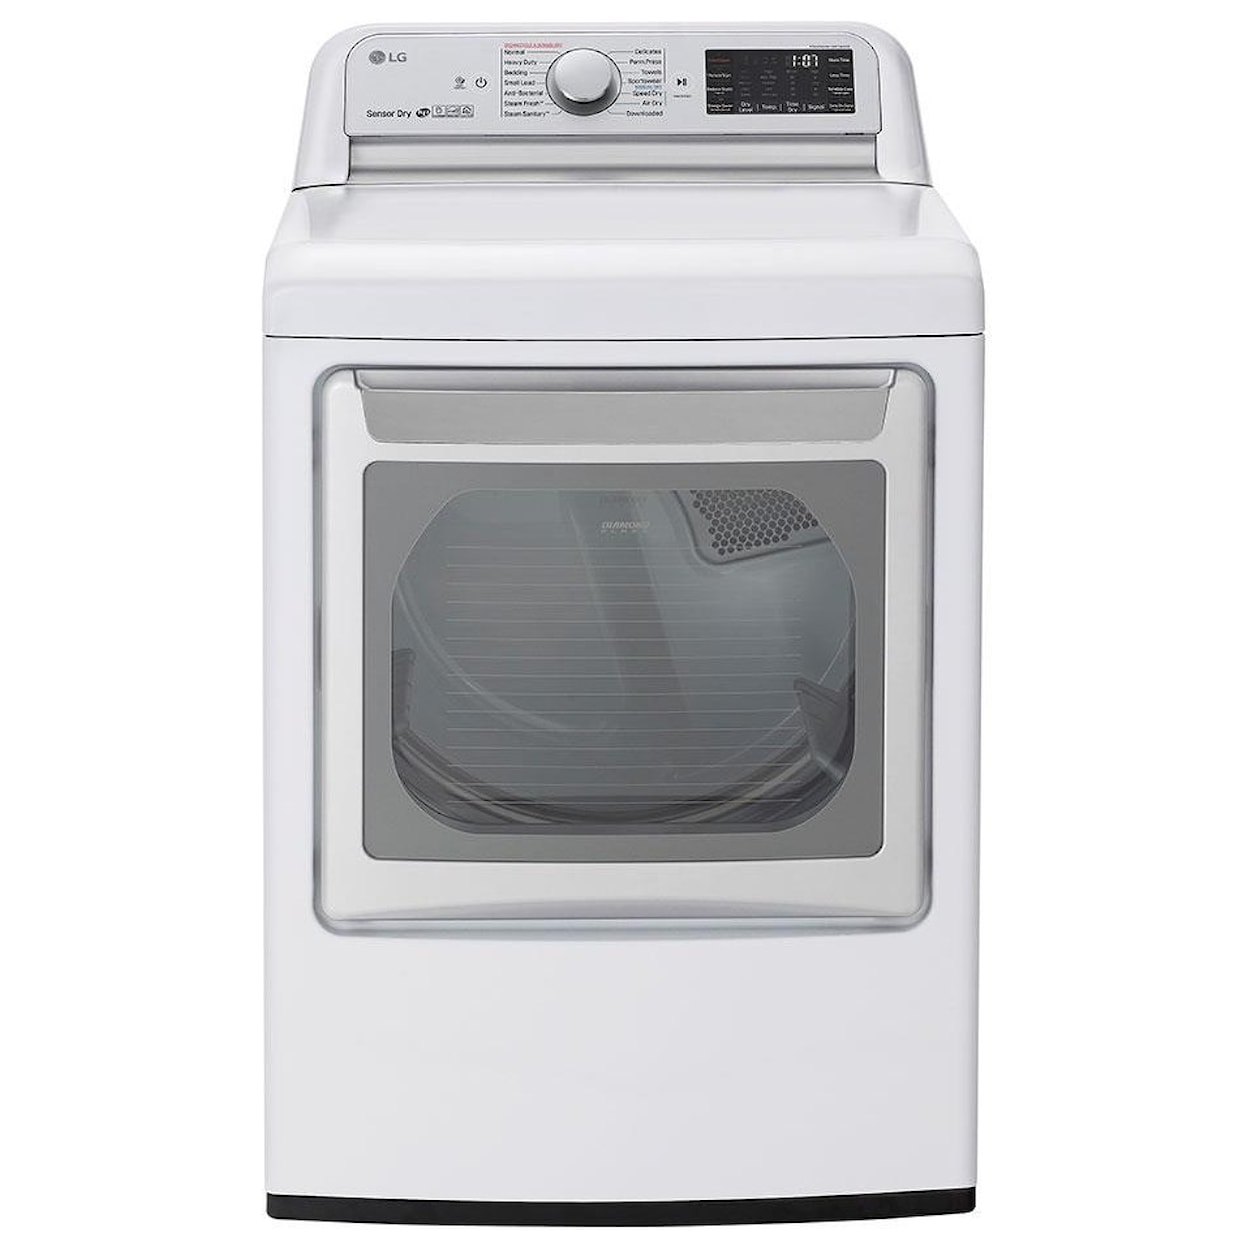 LG Appliances Dryers 7.3 CF SMART DRYER